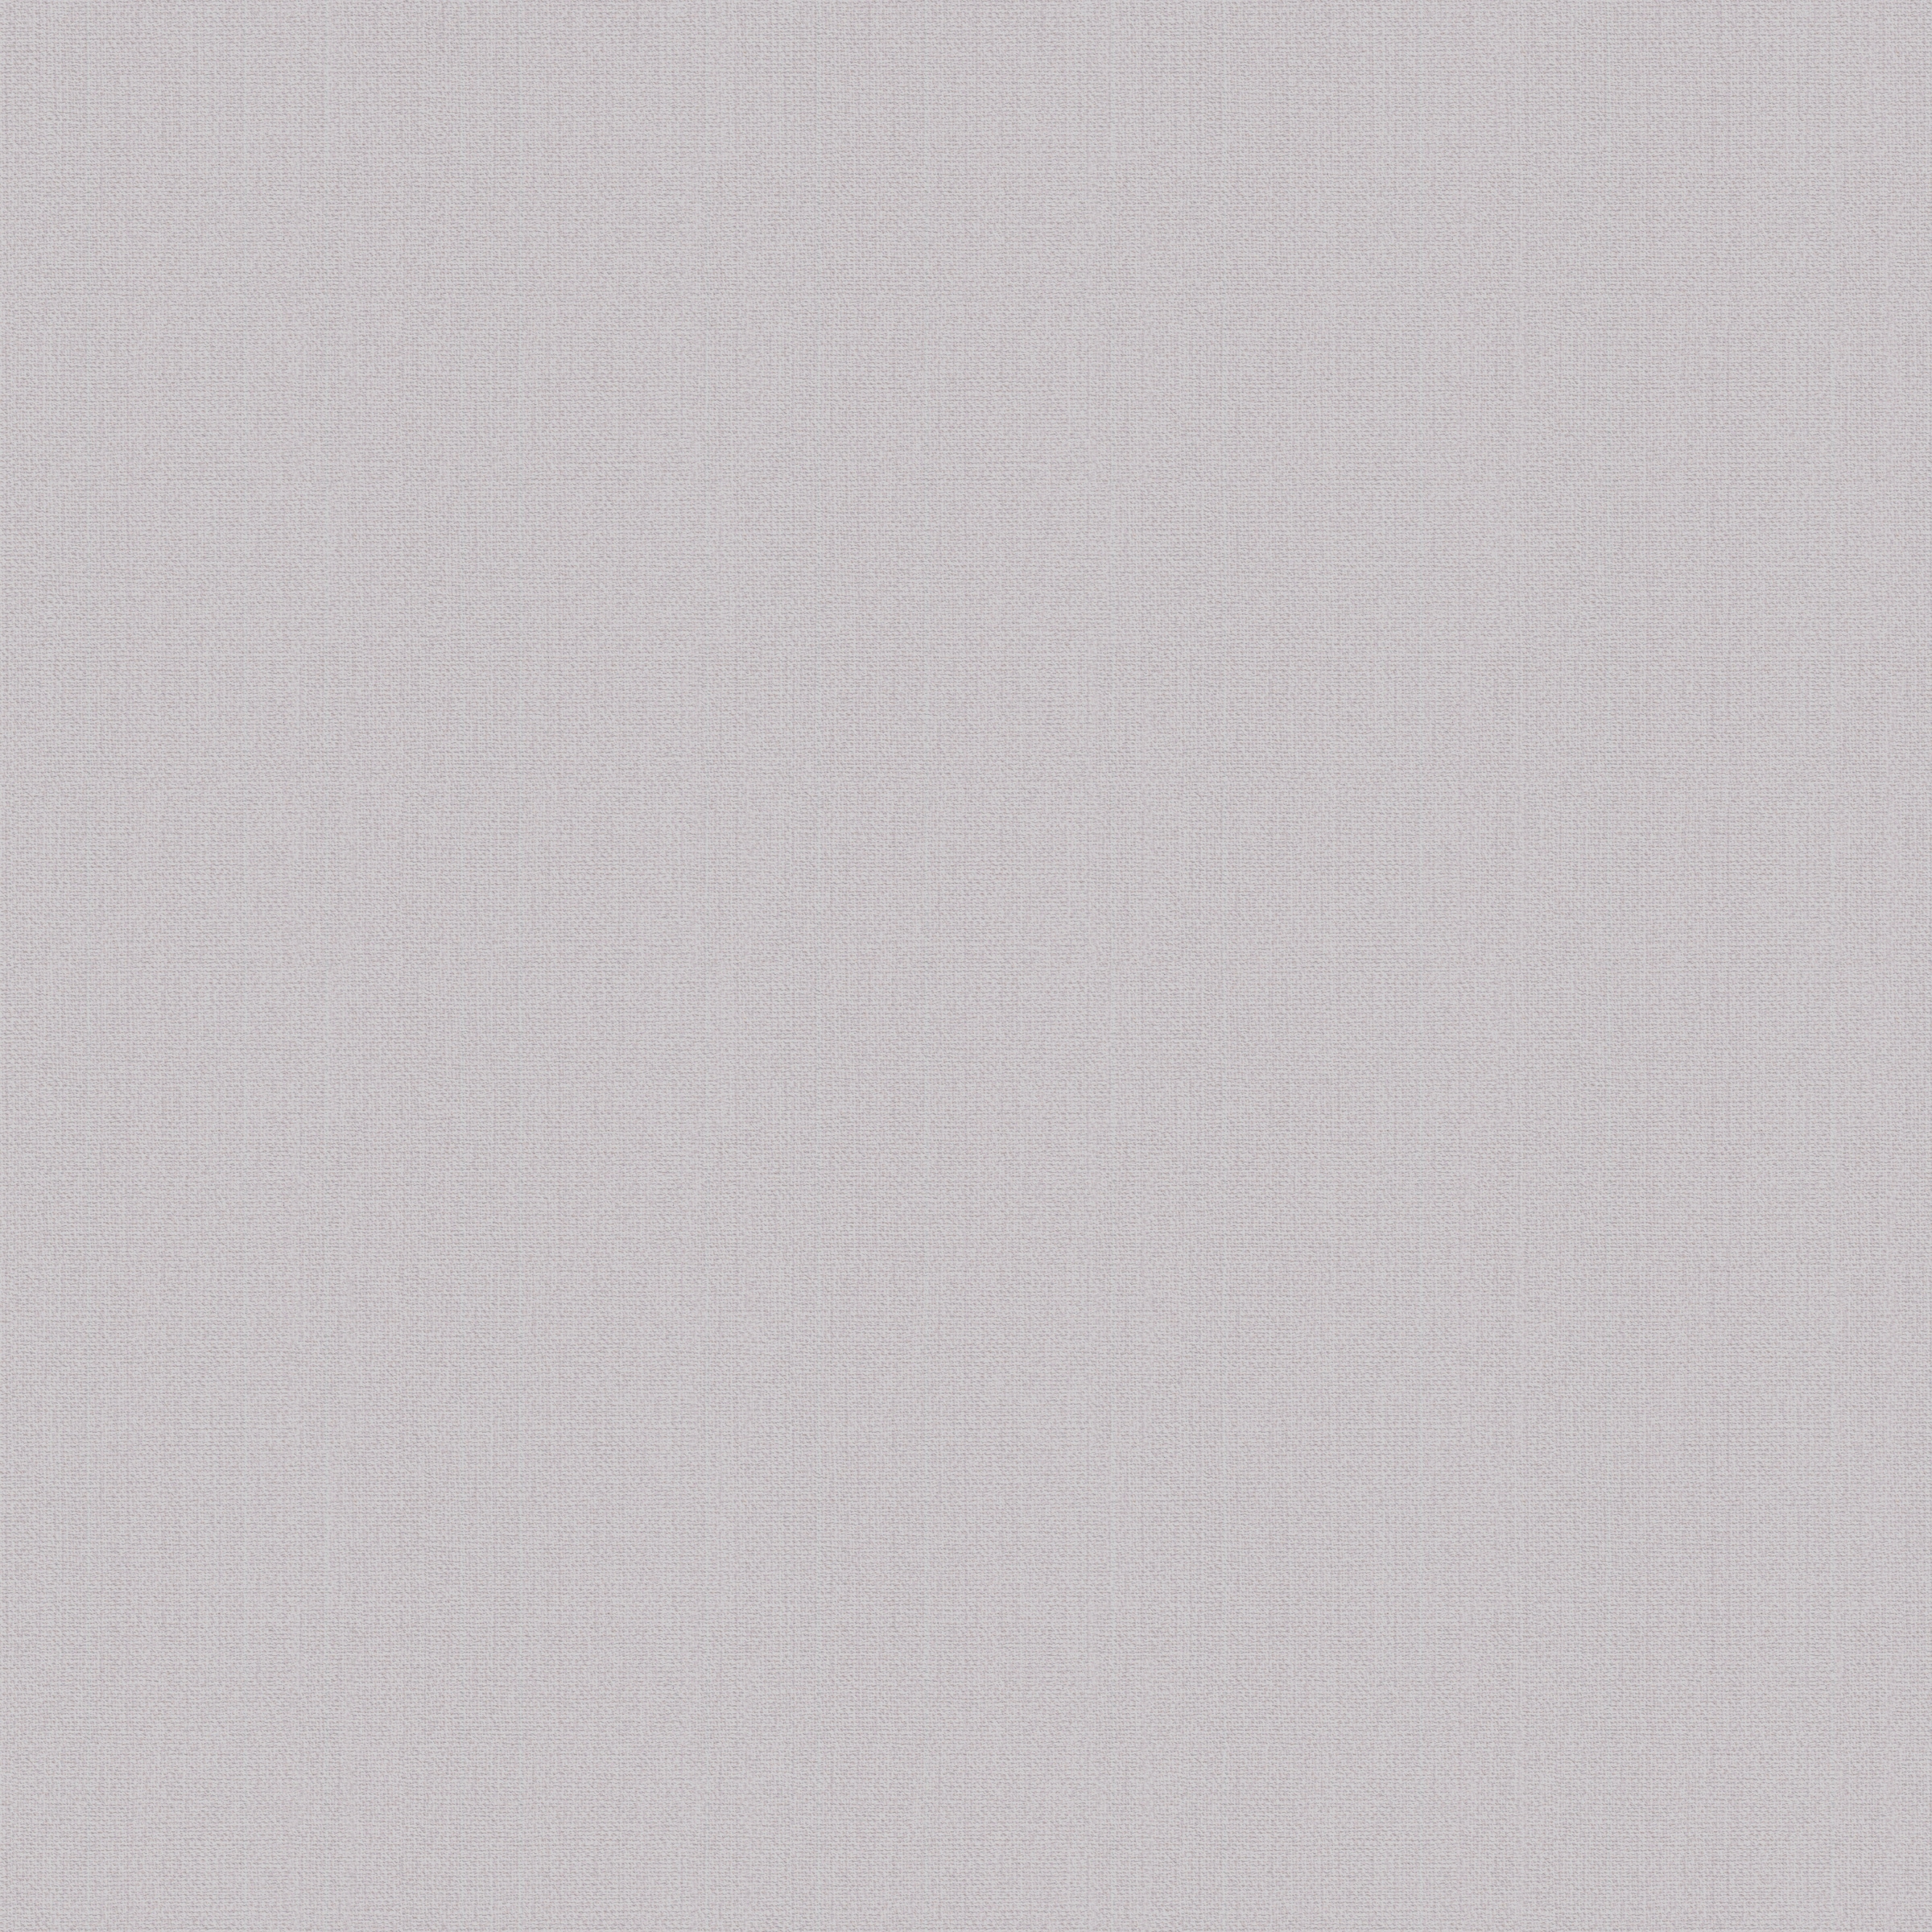 Vliestapete »Baumwolle«, Weiß/Grau - 10m x 52cm